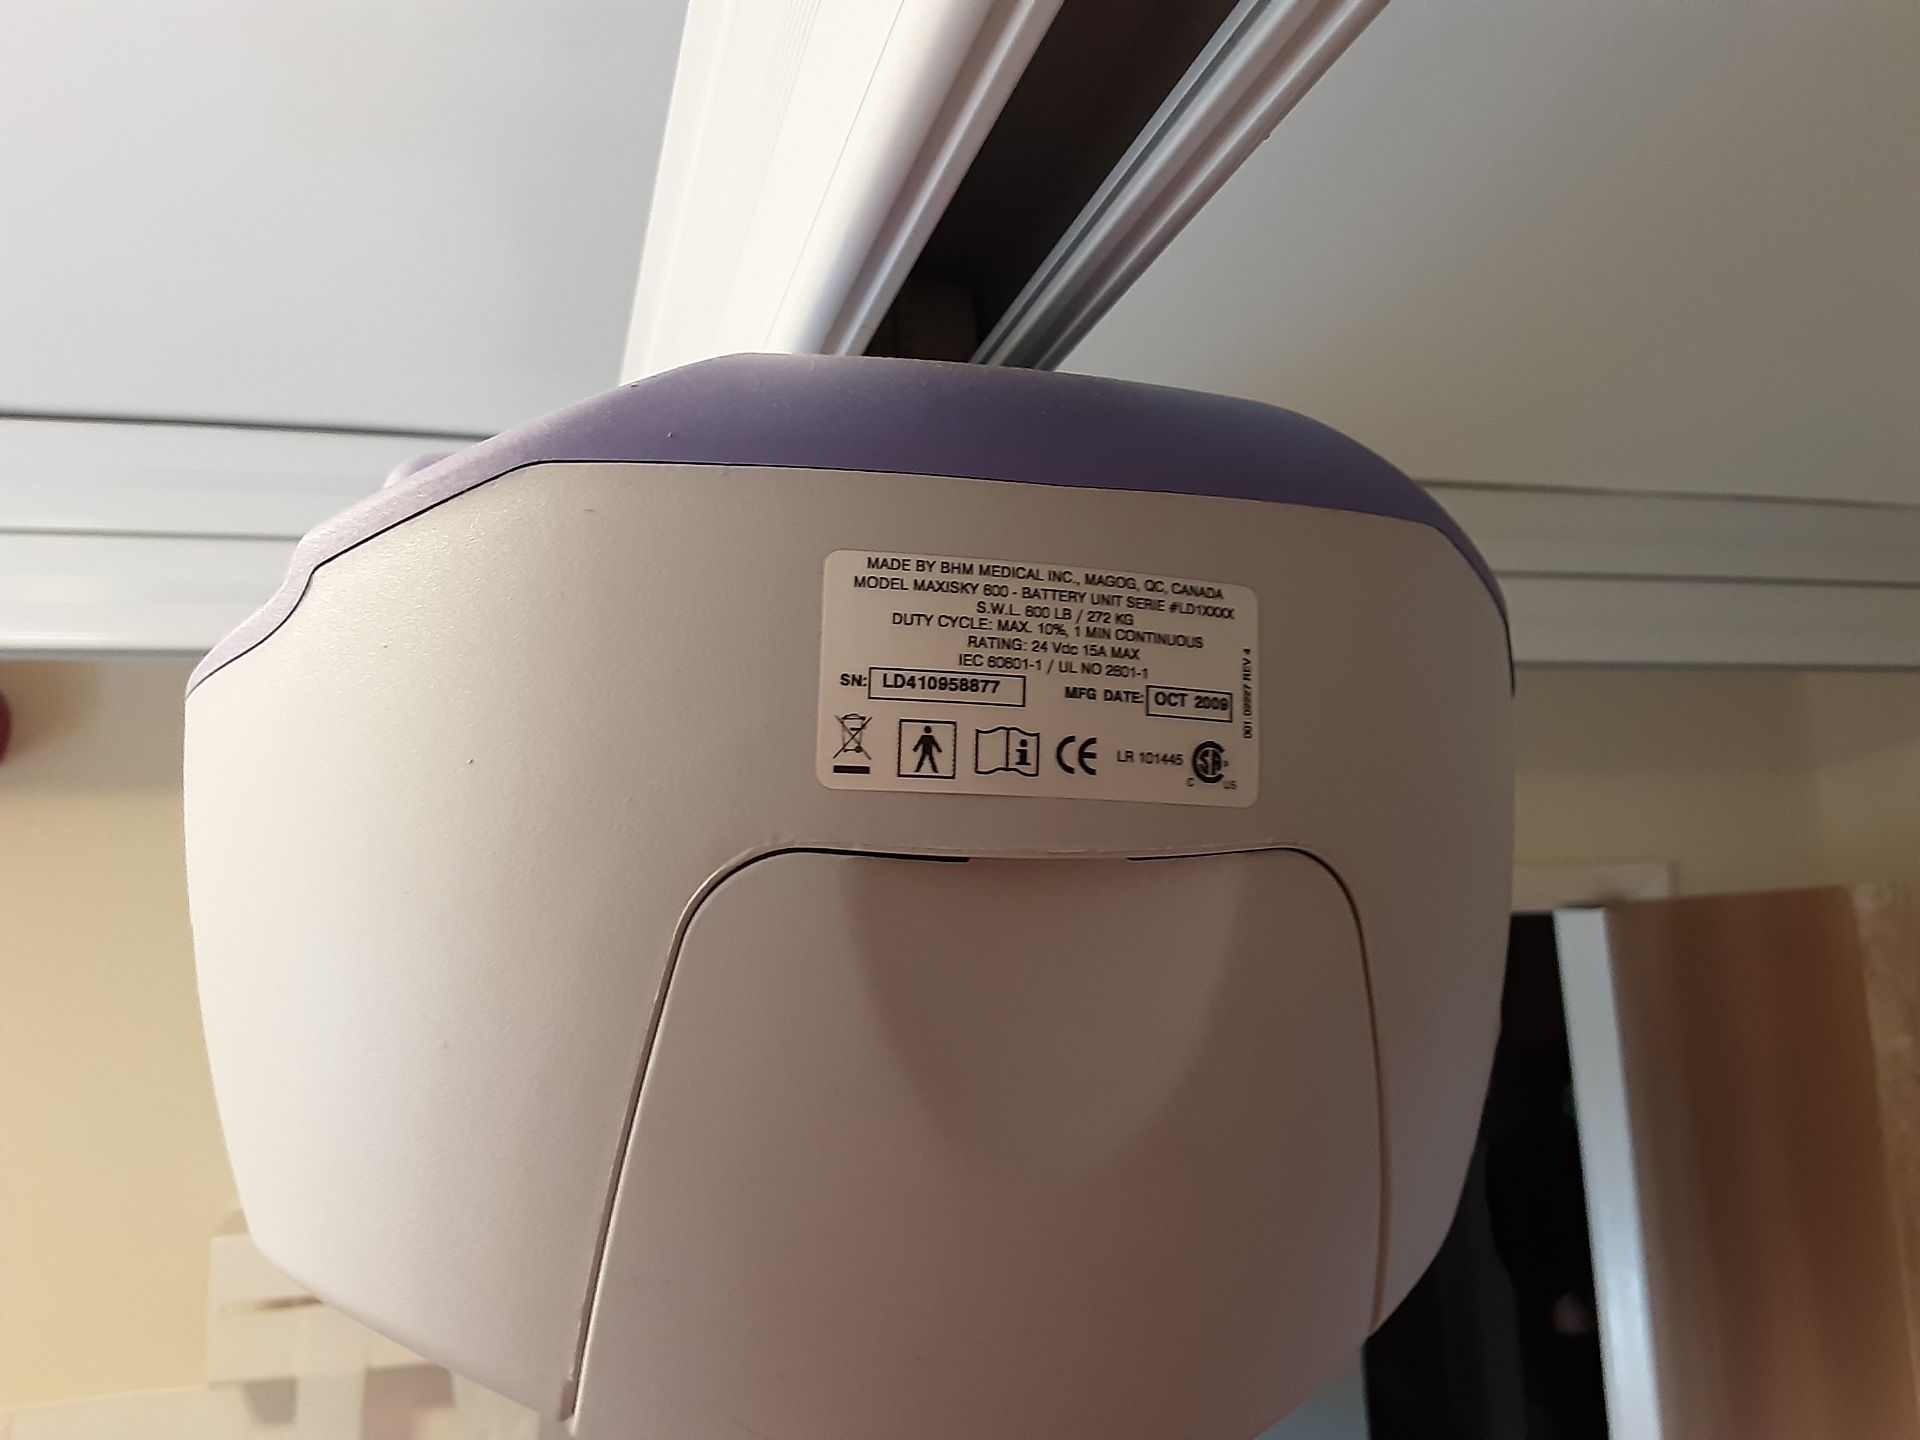 Arjo Maxi Sky 600 Patient Lift with KwikTrak Ceiling Rail System Serial No: LD410958877 - Image 8 of 9